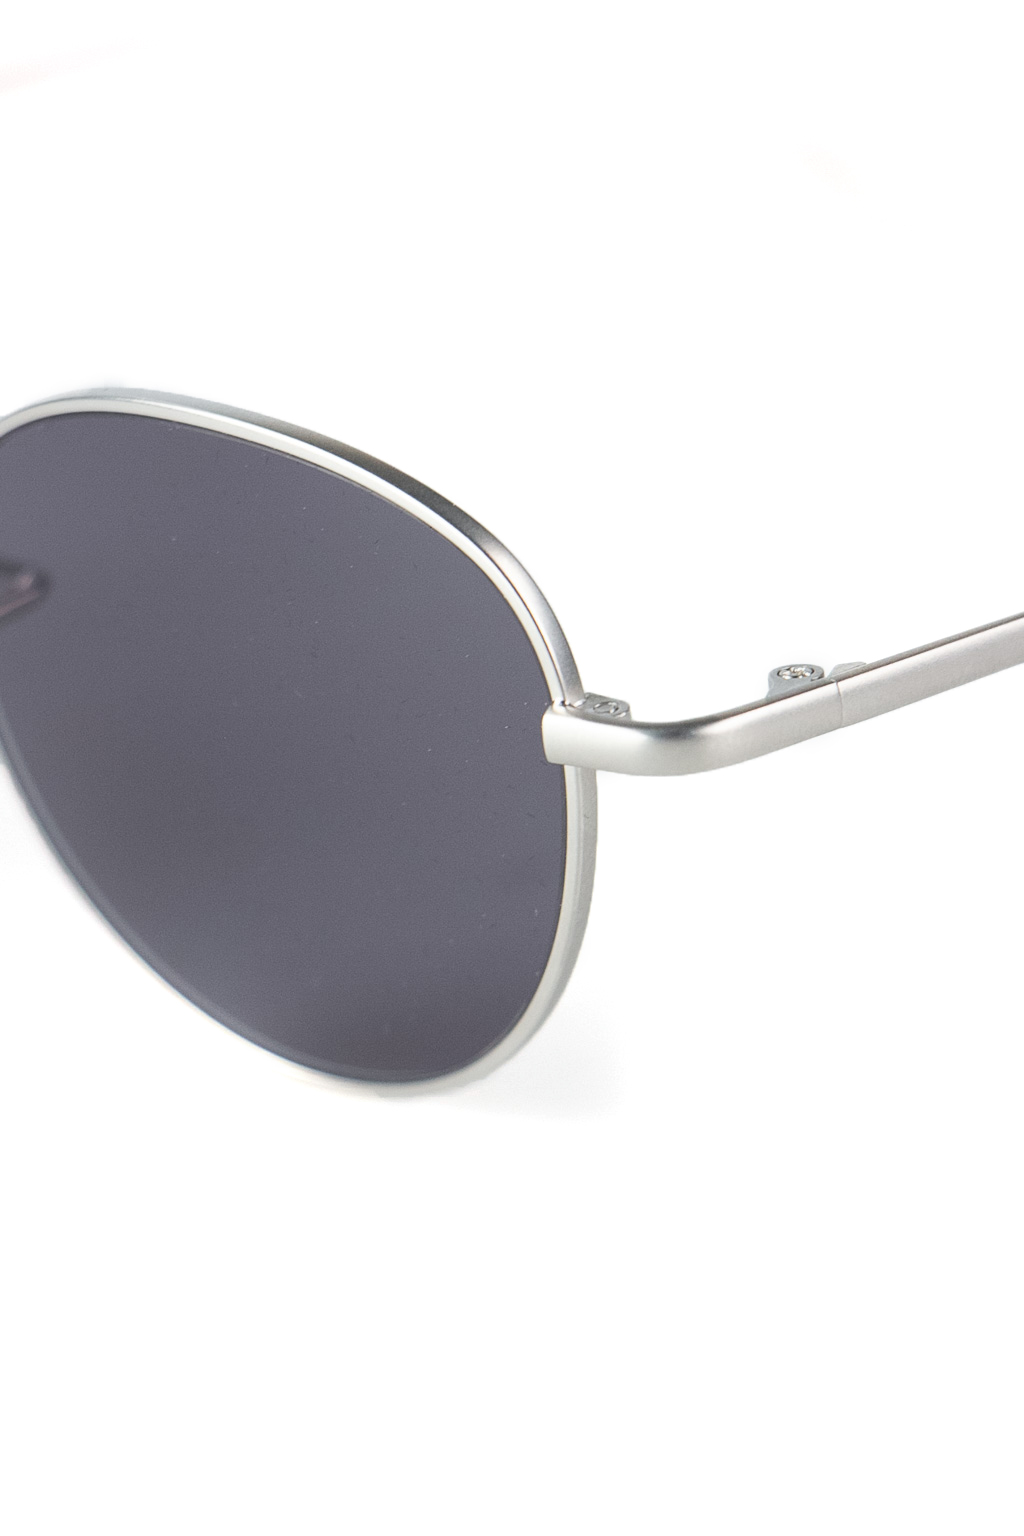 BlueButtonShop - Buddy Optical - Buddy-Optical-eis-Sunglasses